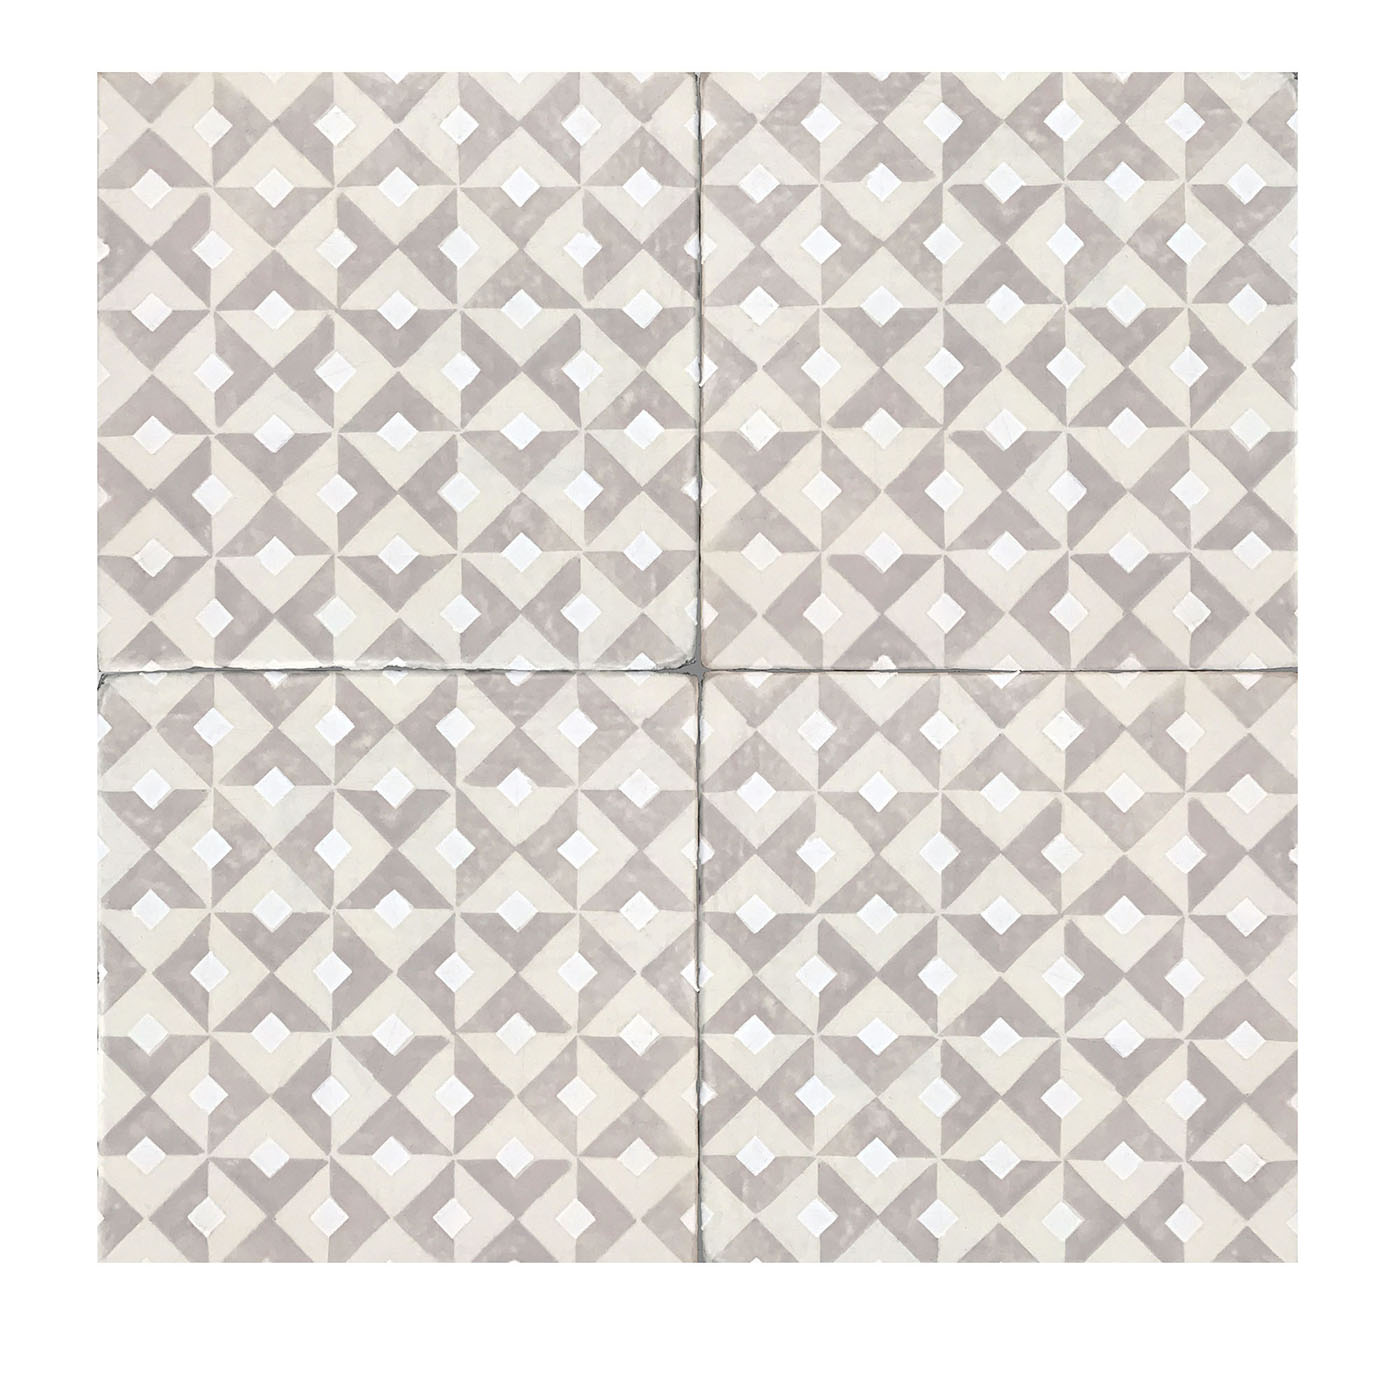 Daamè Set of 25 Square Ivory Tiles #1 - Main view